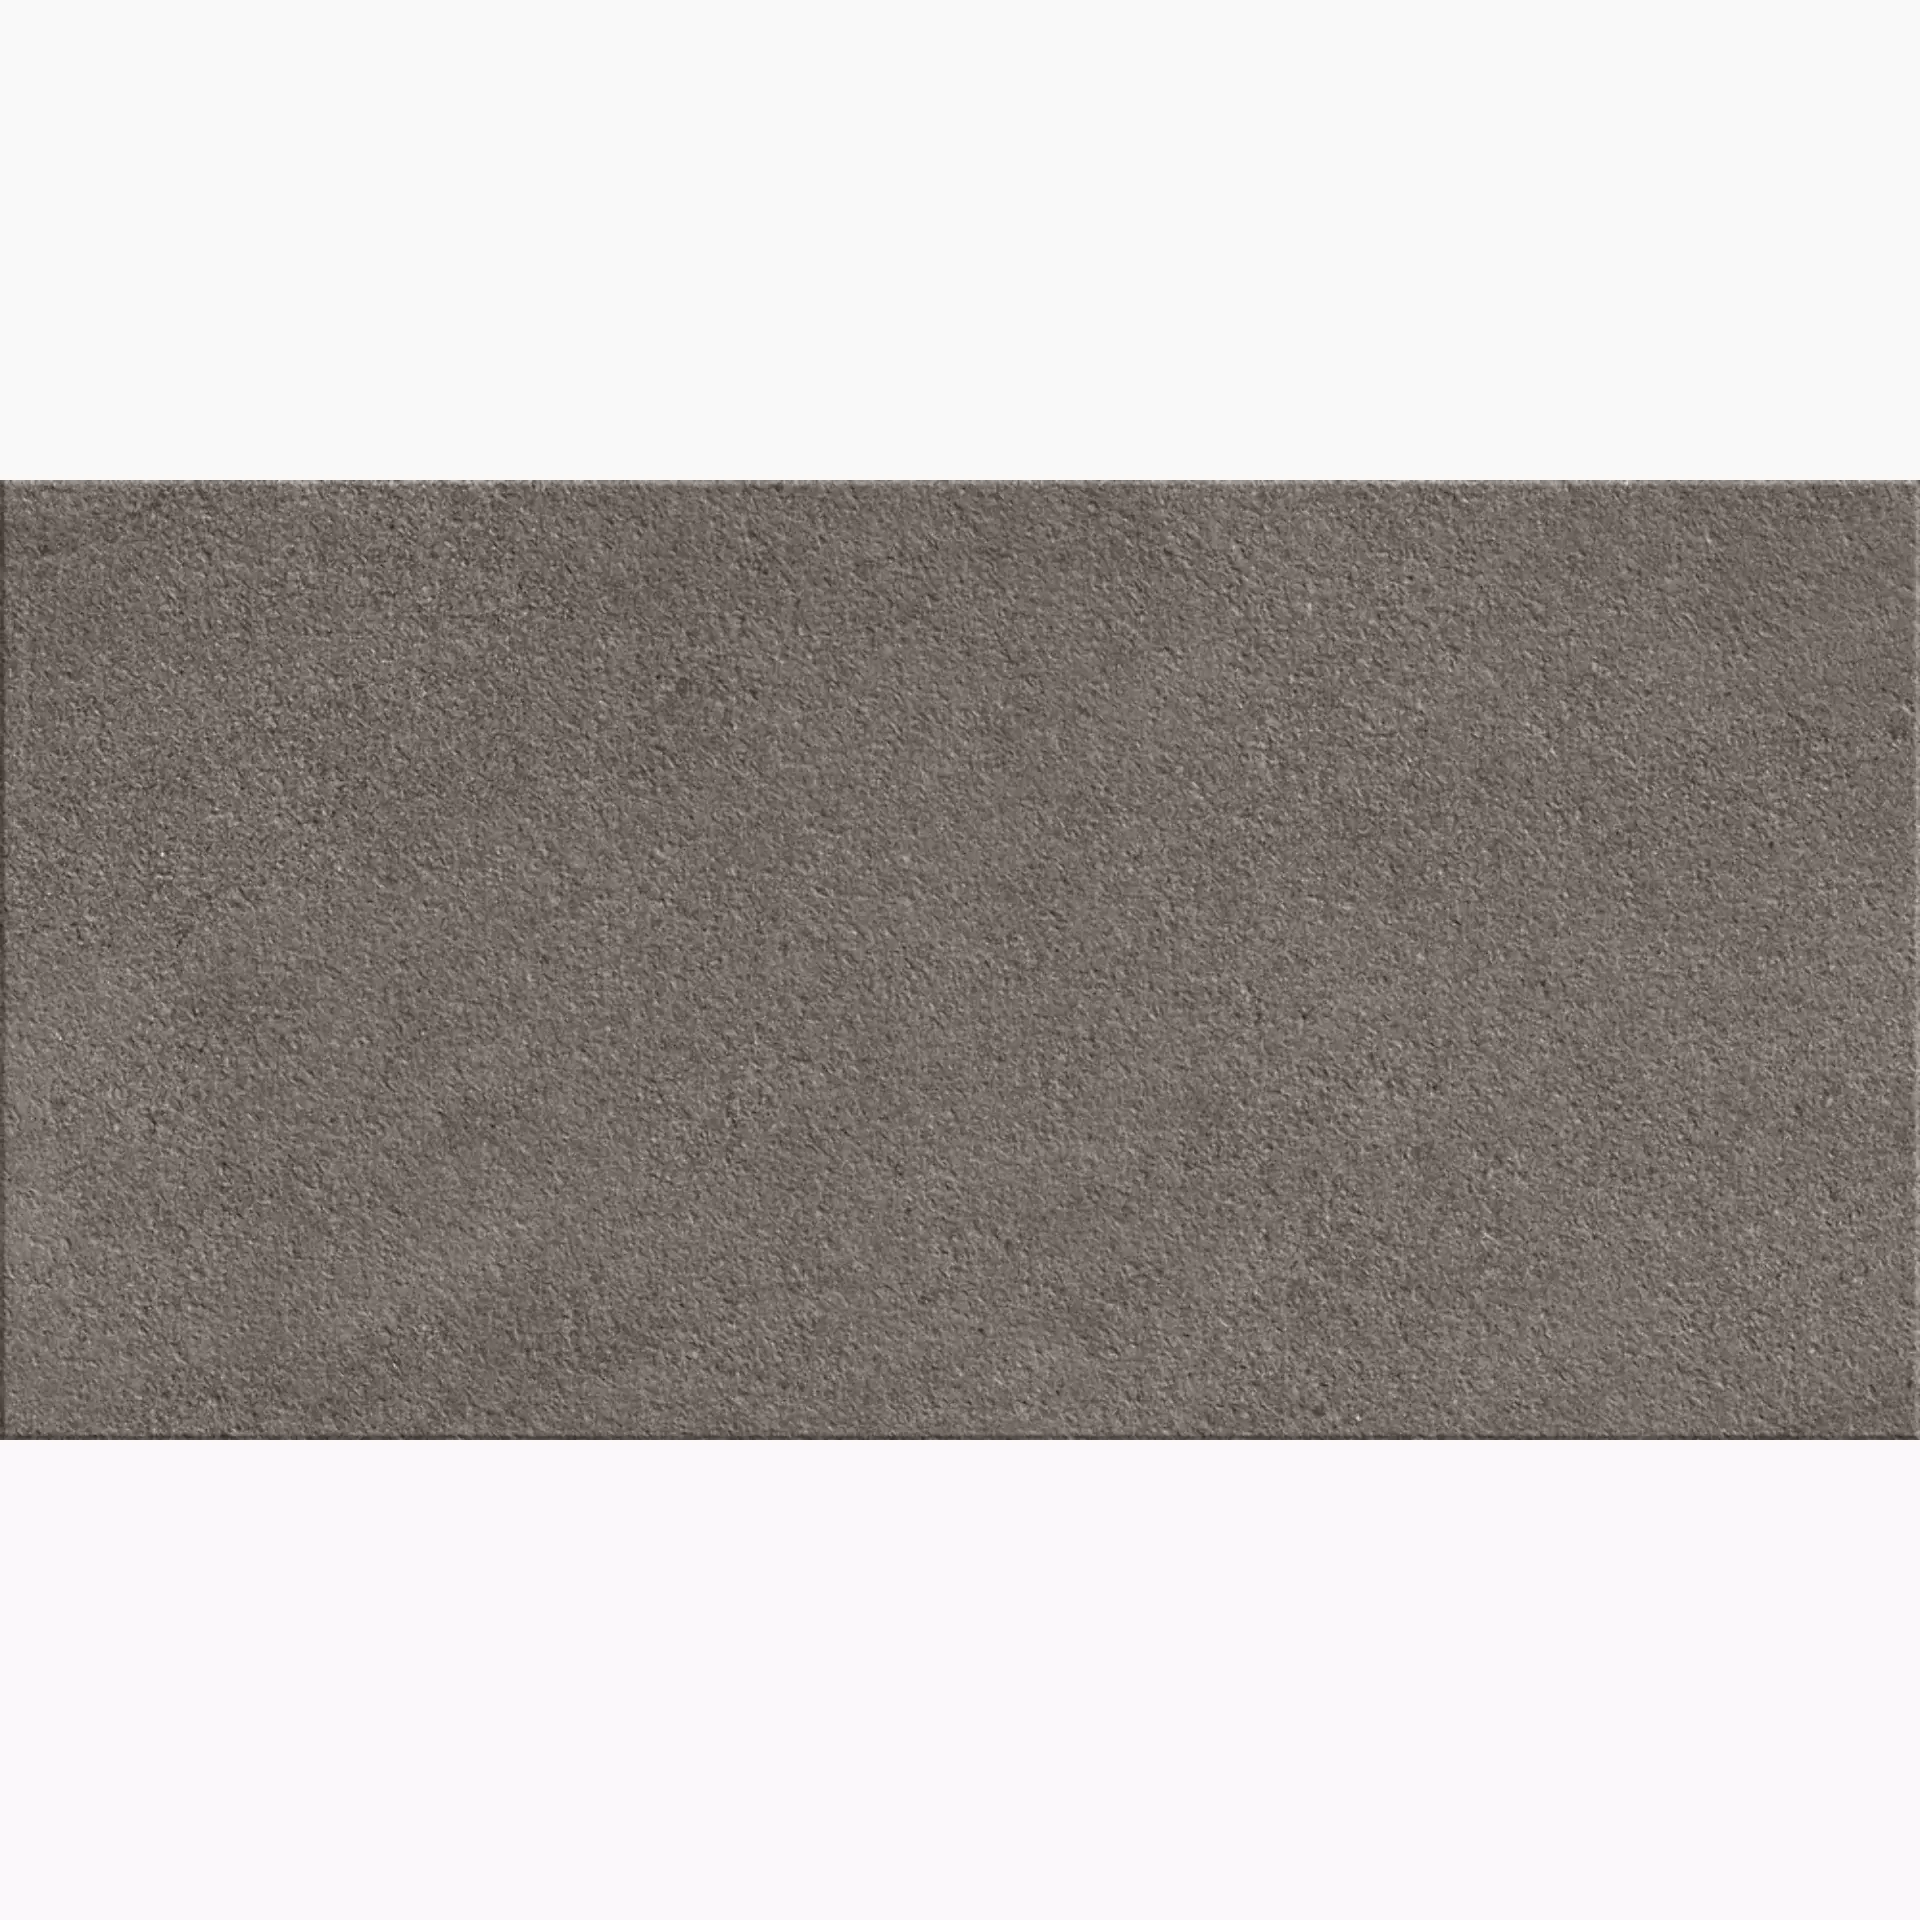 Cottodeste Limestone Slate Blazed Protect EGXLS63 60x120cm rectified 20mm